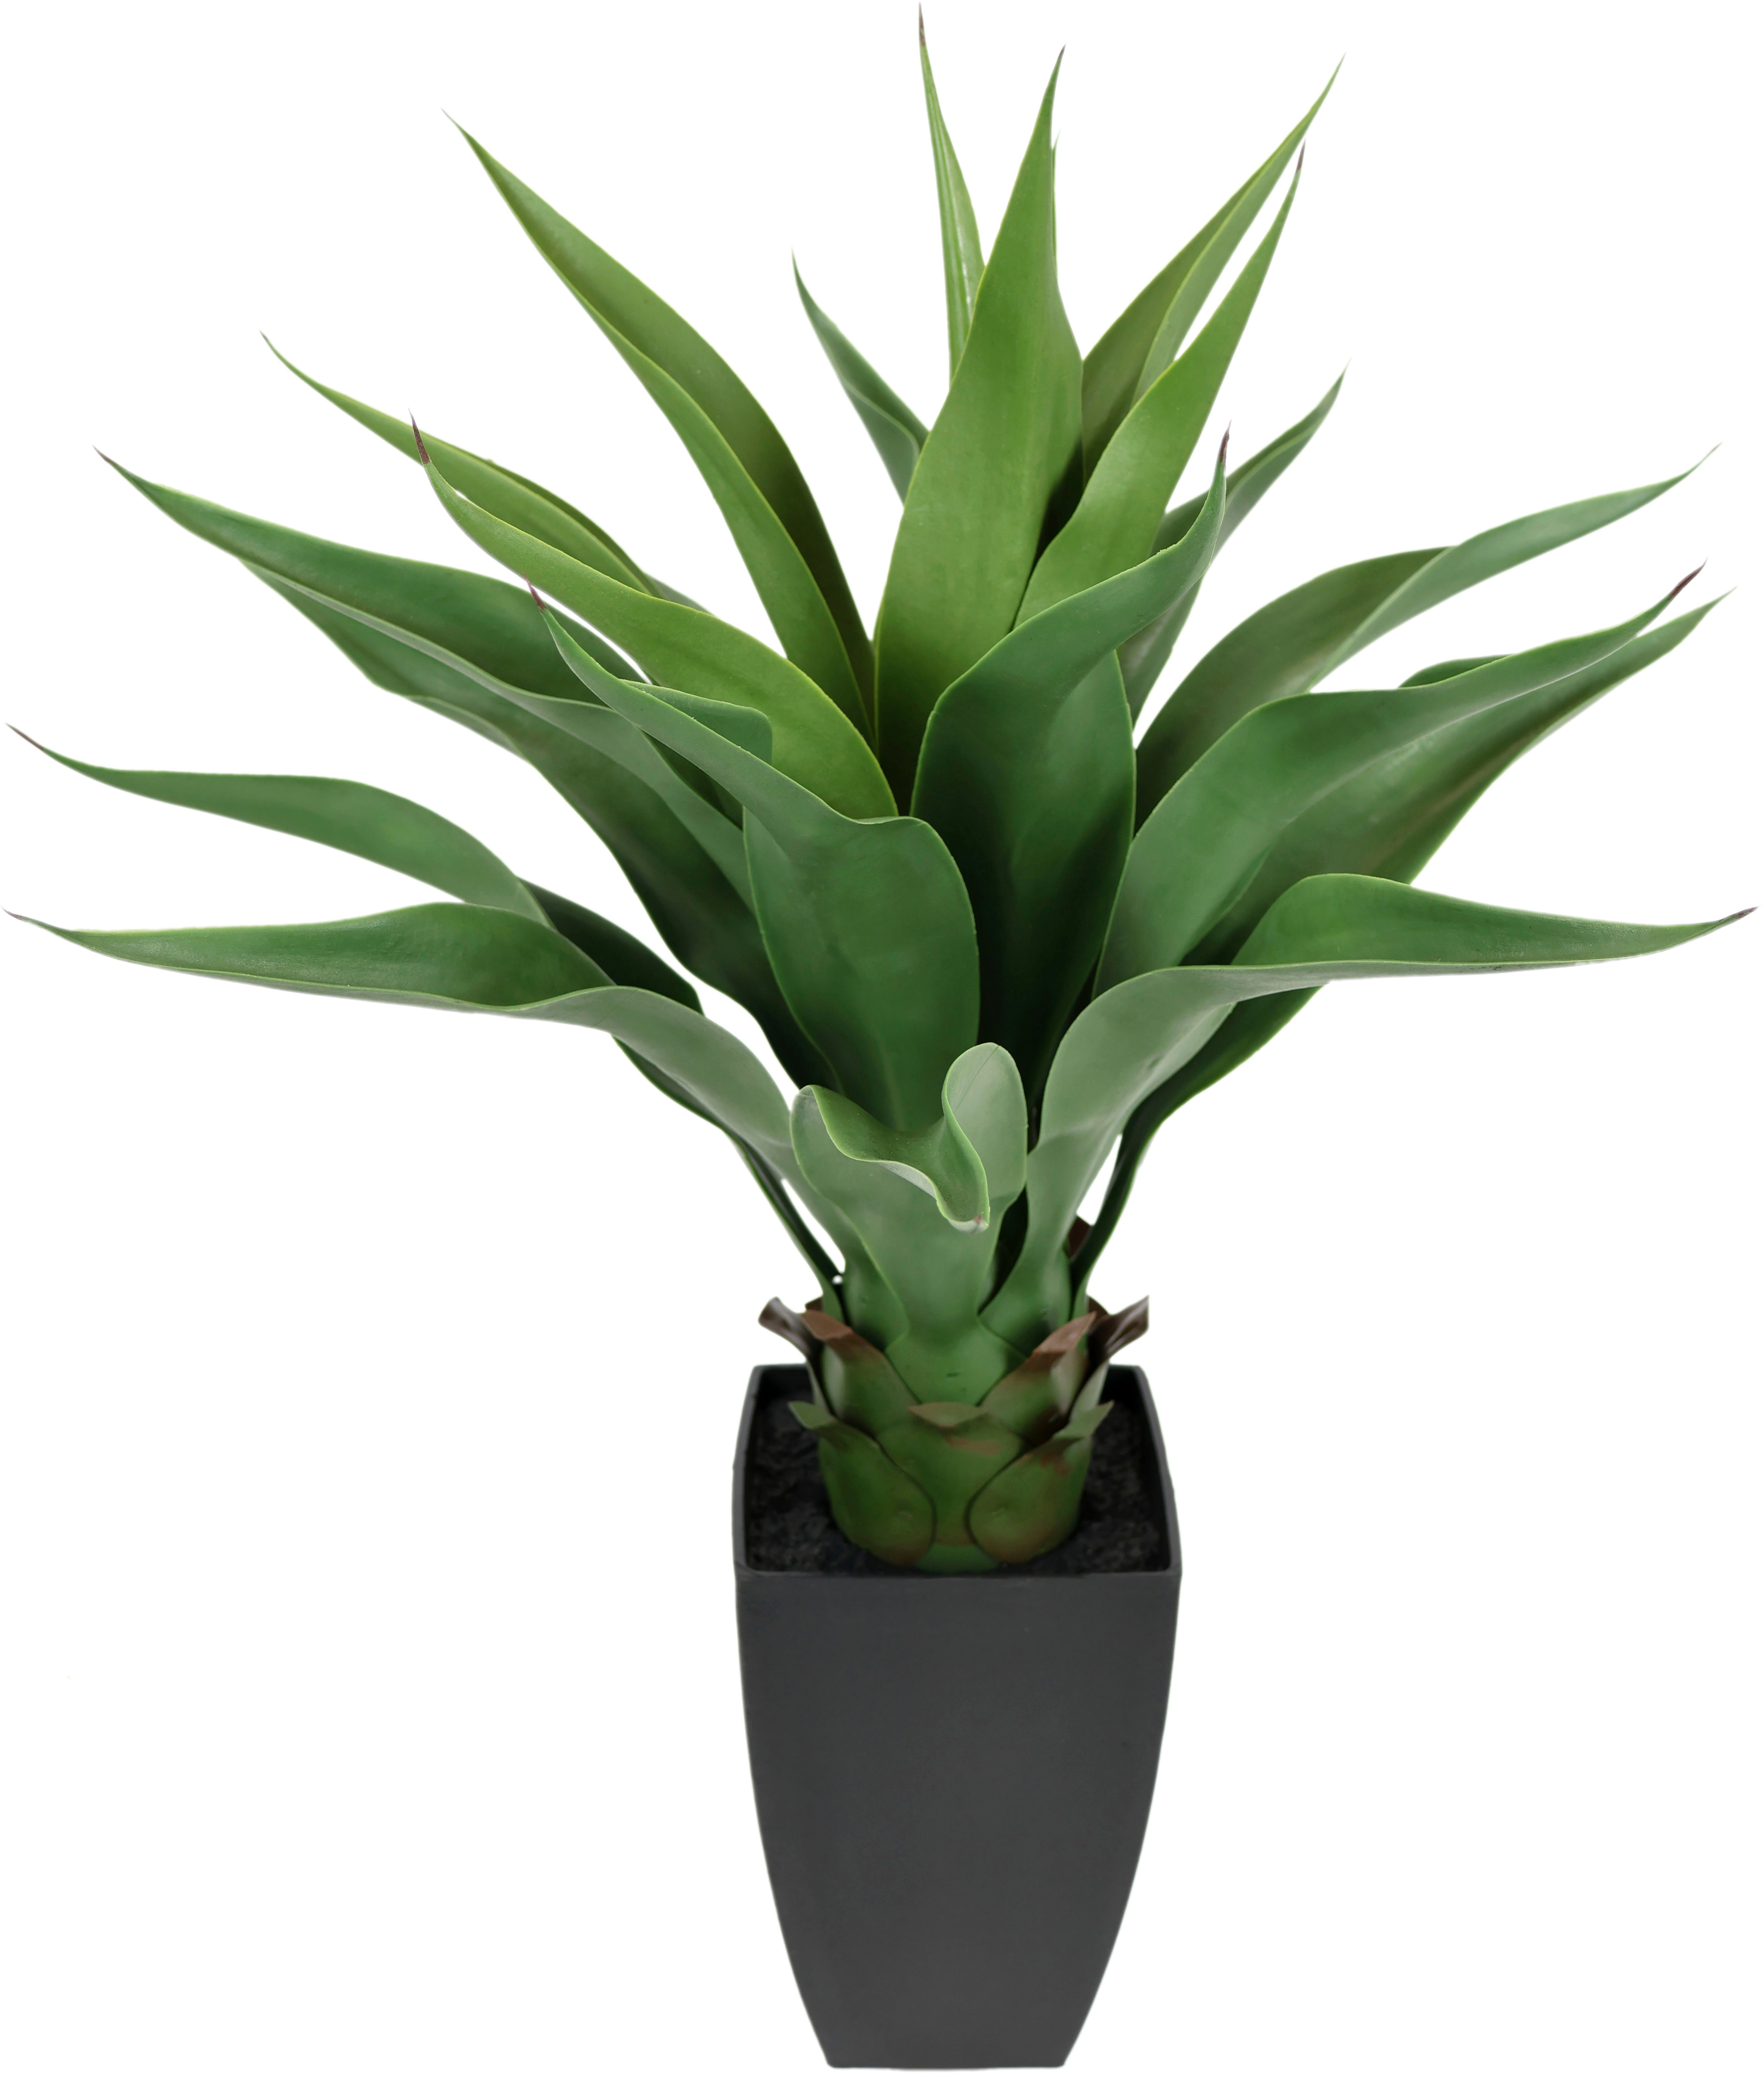 Kunstpflanze Künstliche Agave im Topf Pflanze Aloe Vera Sansevieria,  I.GE.A., Höhe 70 cm, Grünpflanze Zimmerpflanze Palme